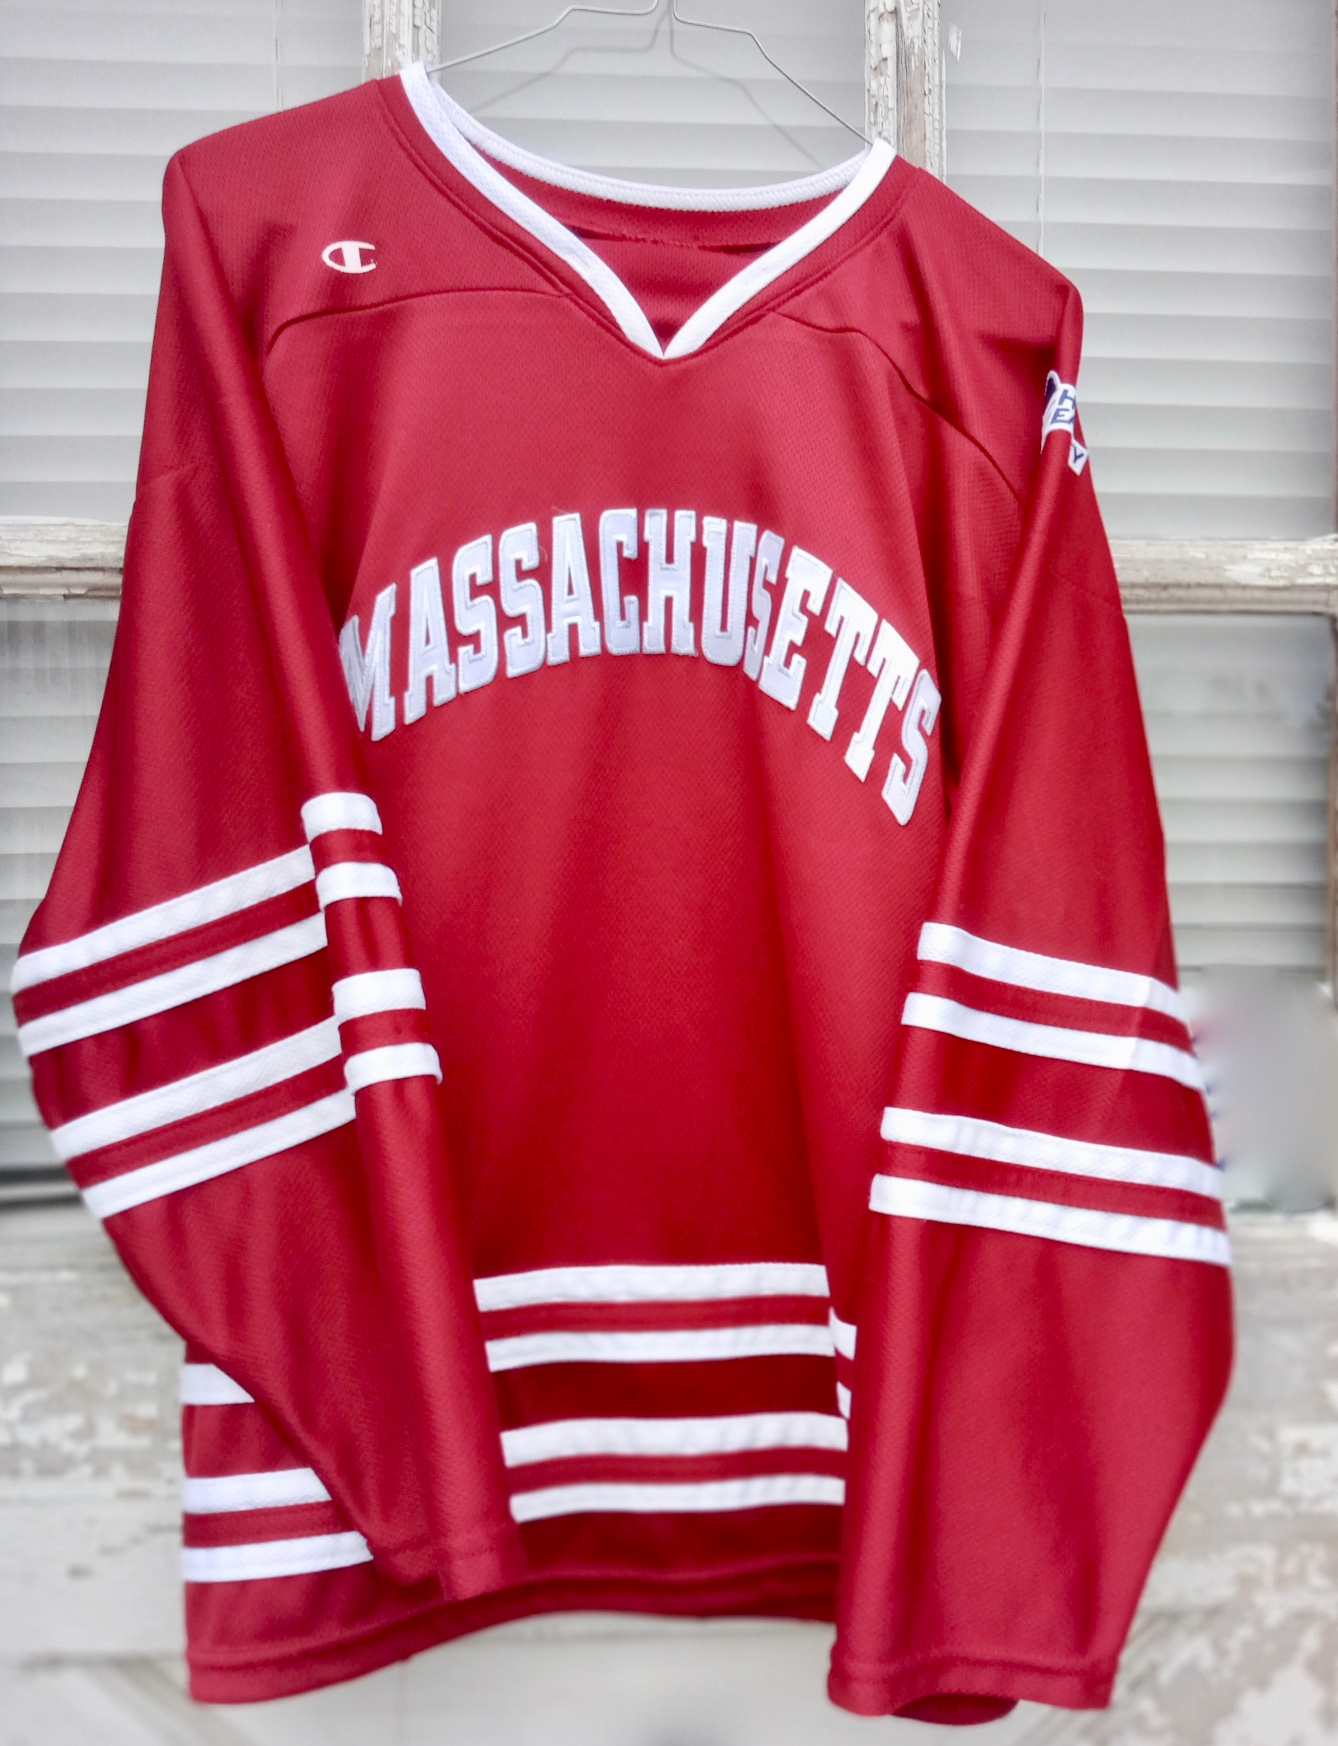 Youth Large UMass Amherst Minutemen Hockey Jersey ca. 2013 Maroon Champion